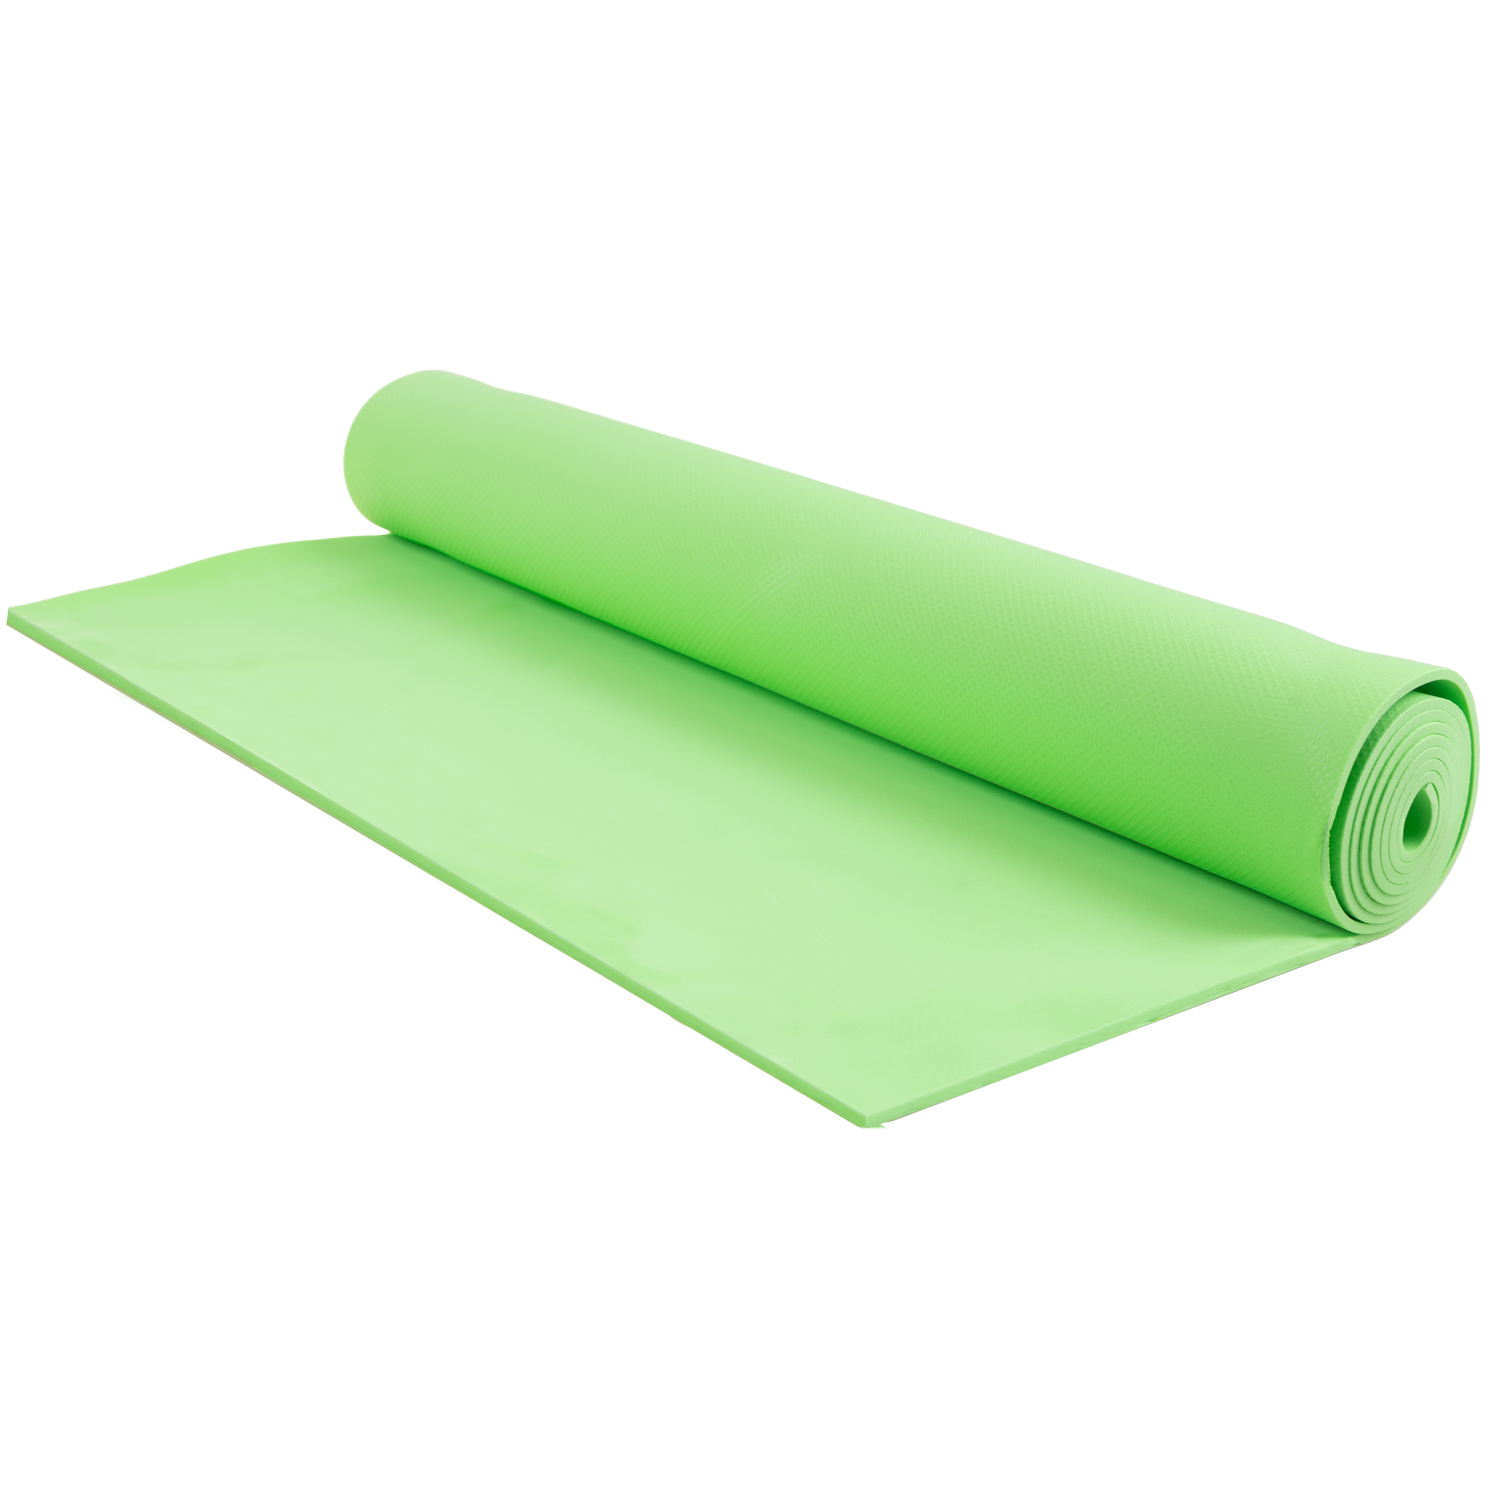 Acheter tapis d'exercice – Tapis de sport, tapis de yoga - Vert, Epais